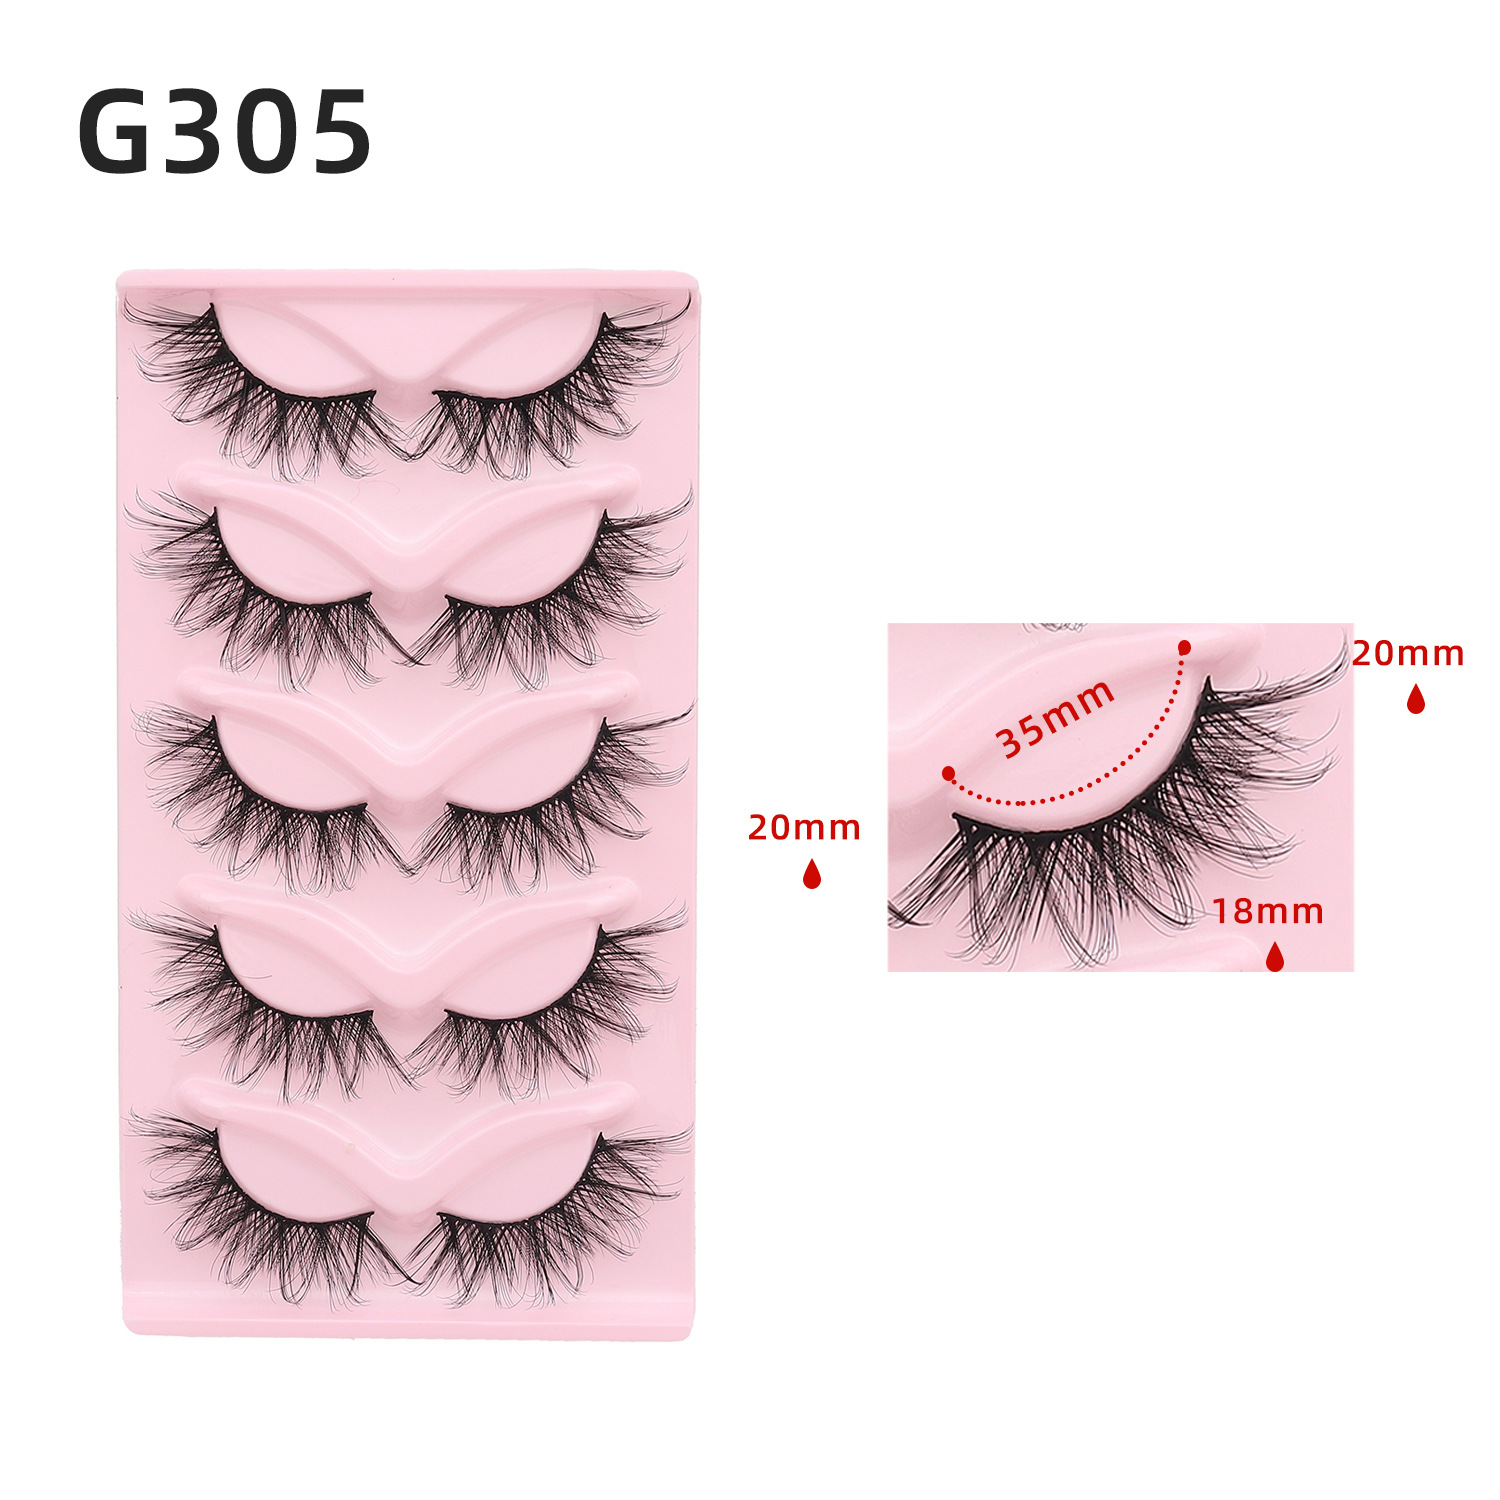 G305.jpg